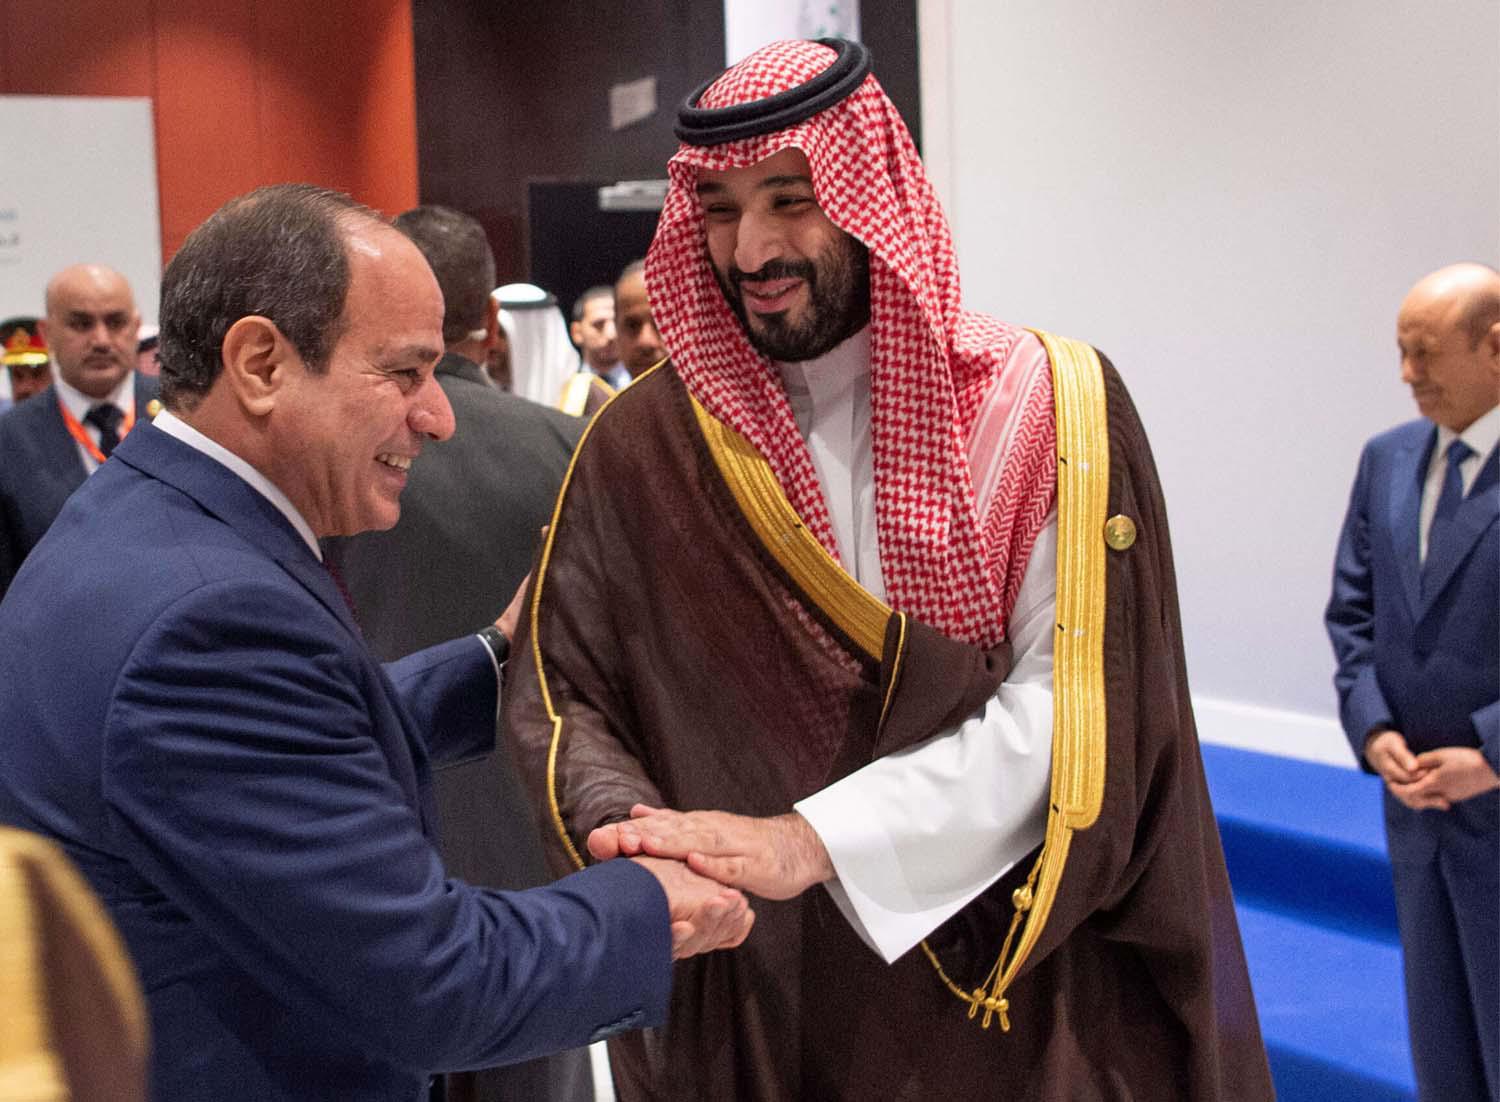 Egypt has long been a recipient of Saudi funds